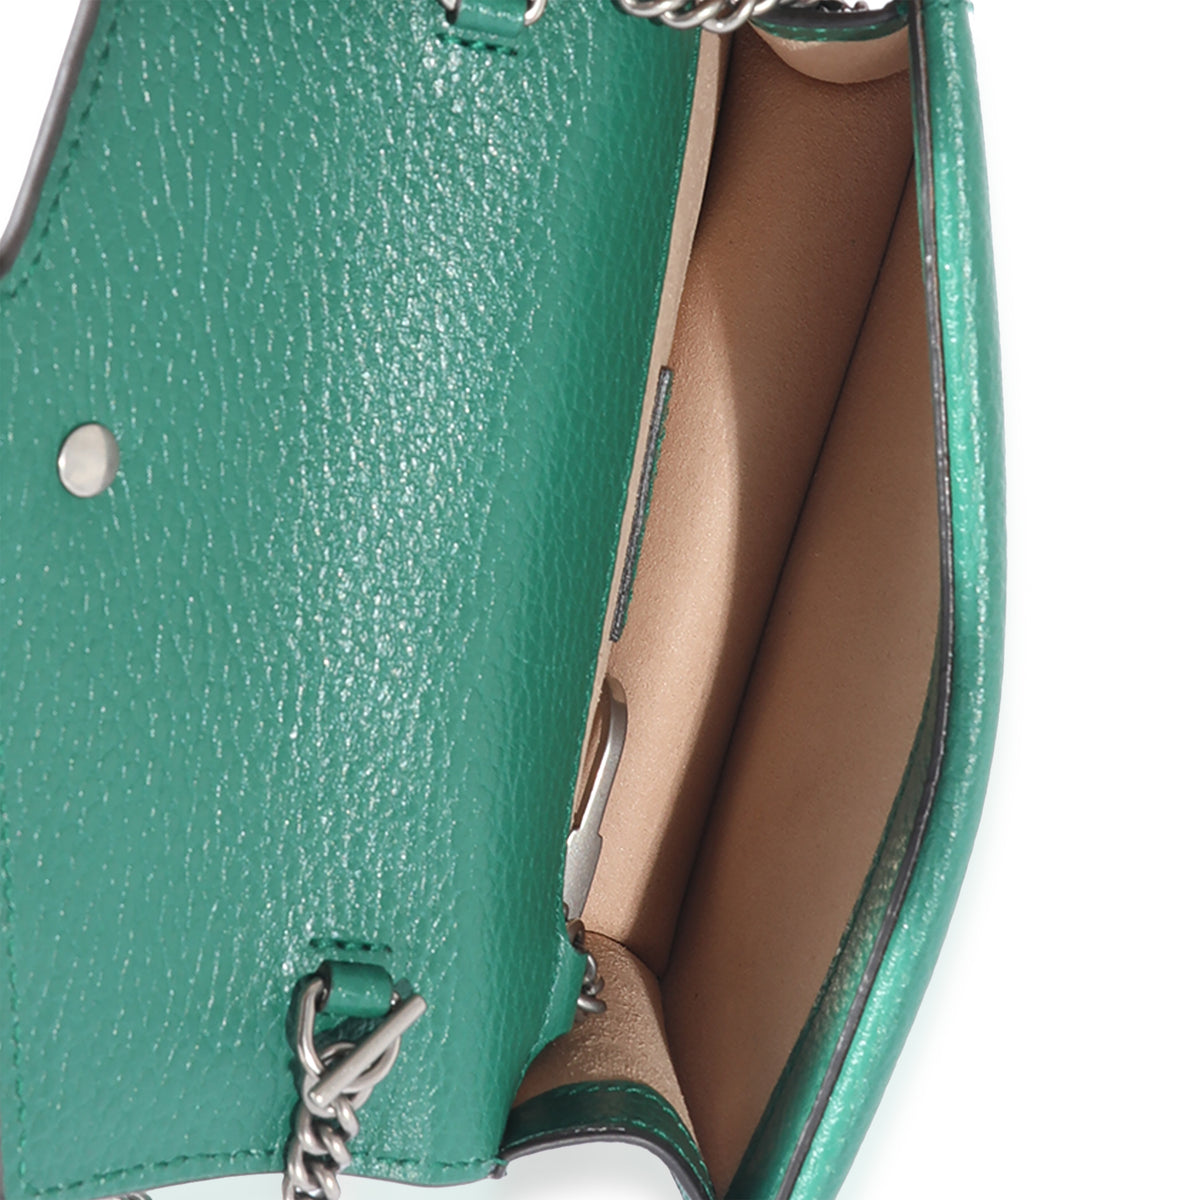 Green Dionysus supermini leather handbag, Gucci